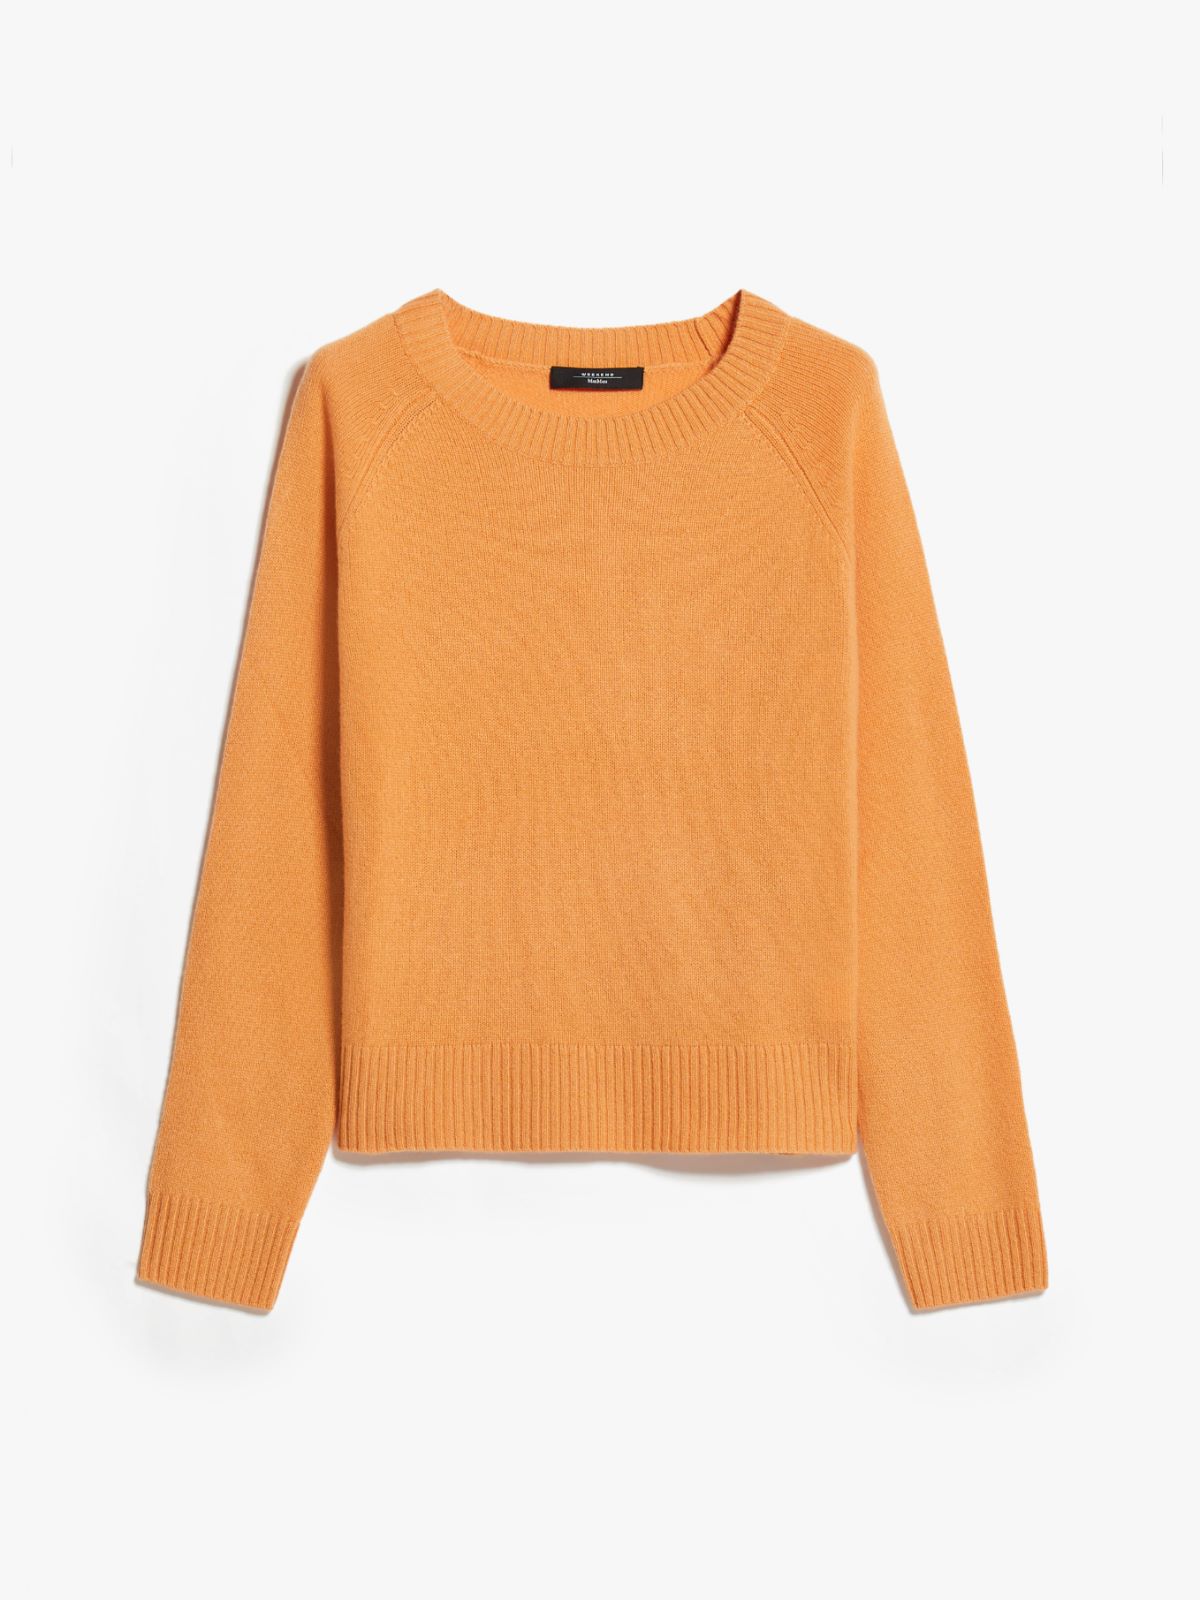 Cashmere sweater - ORANGE - Weekend Max Mara - 6